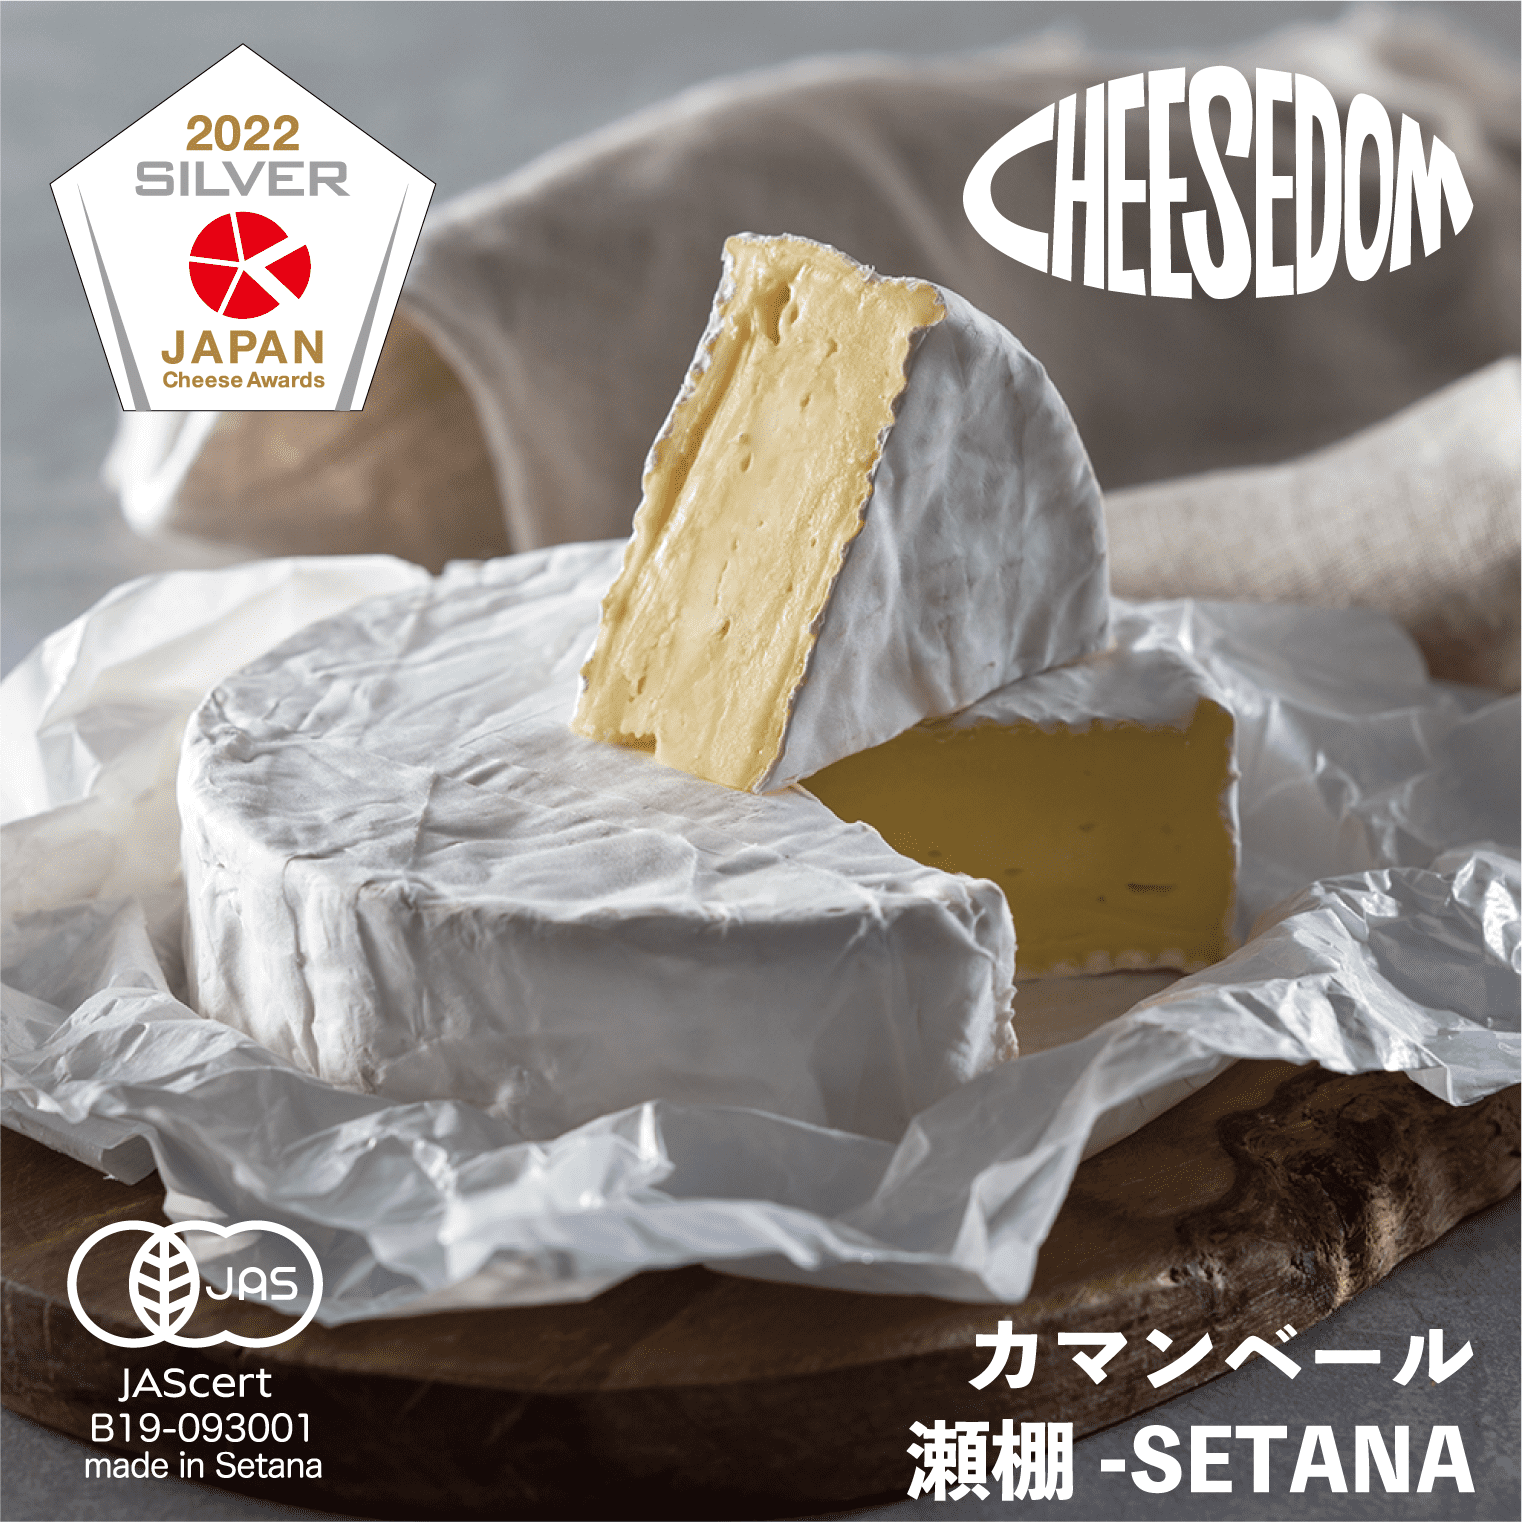 CHEESEDOM(チーズダム)のチーズ5種セット